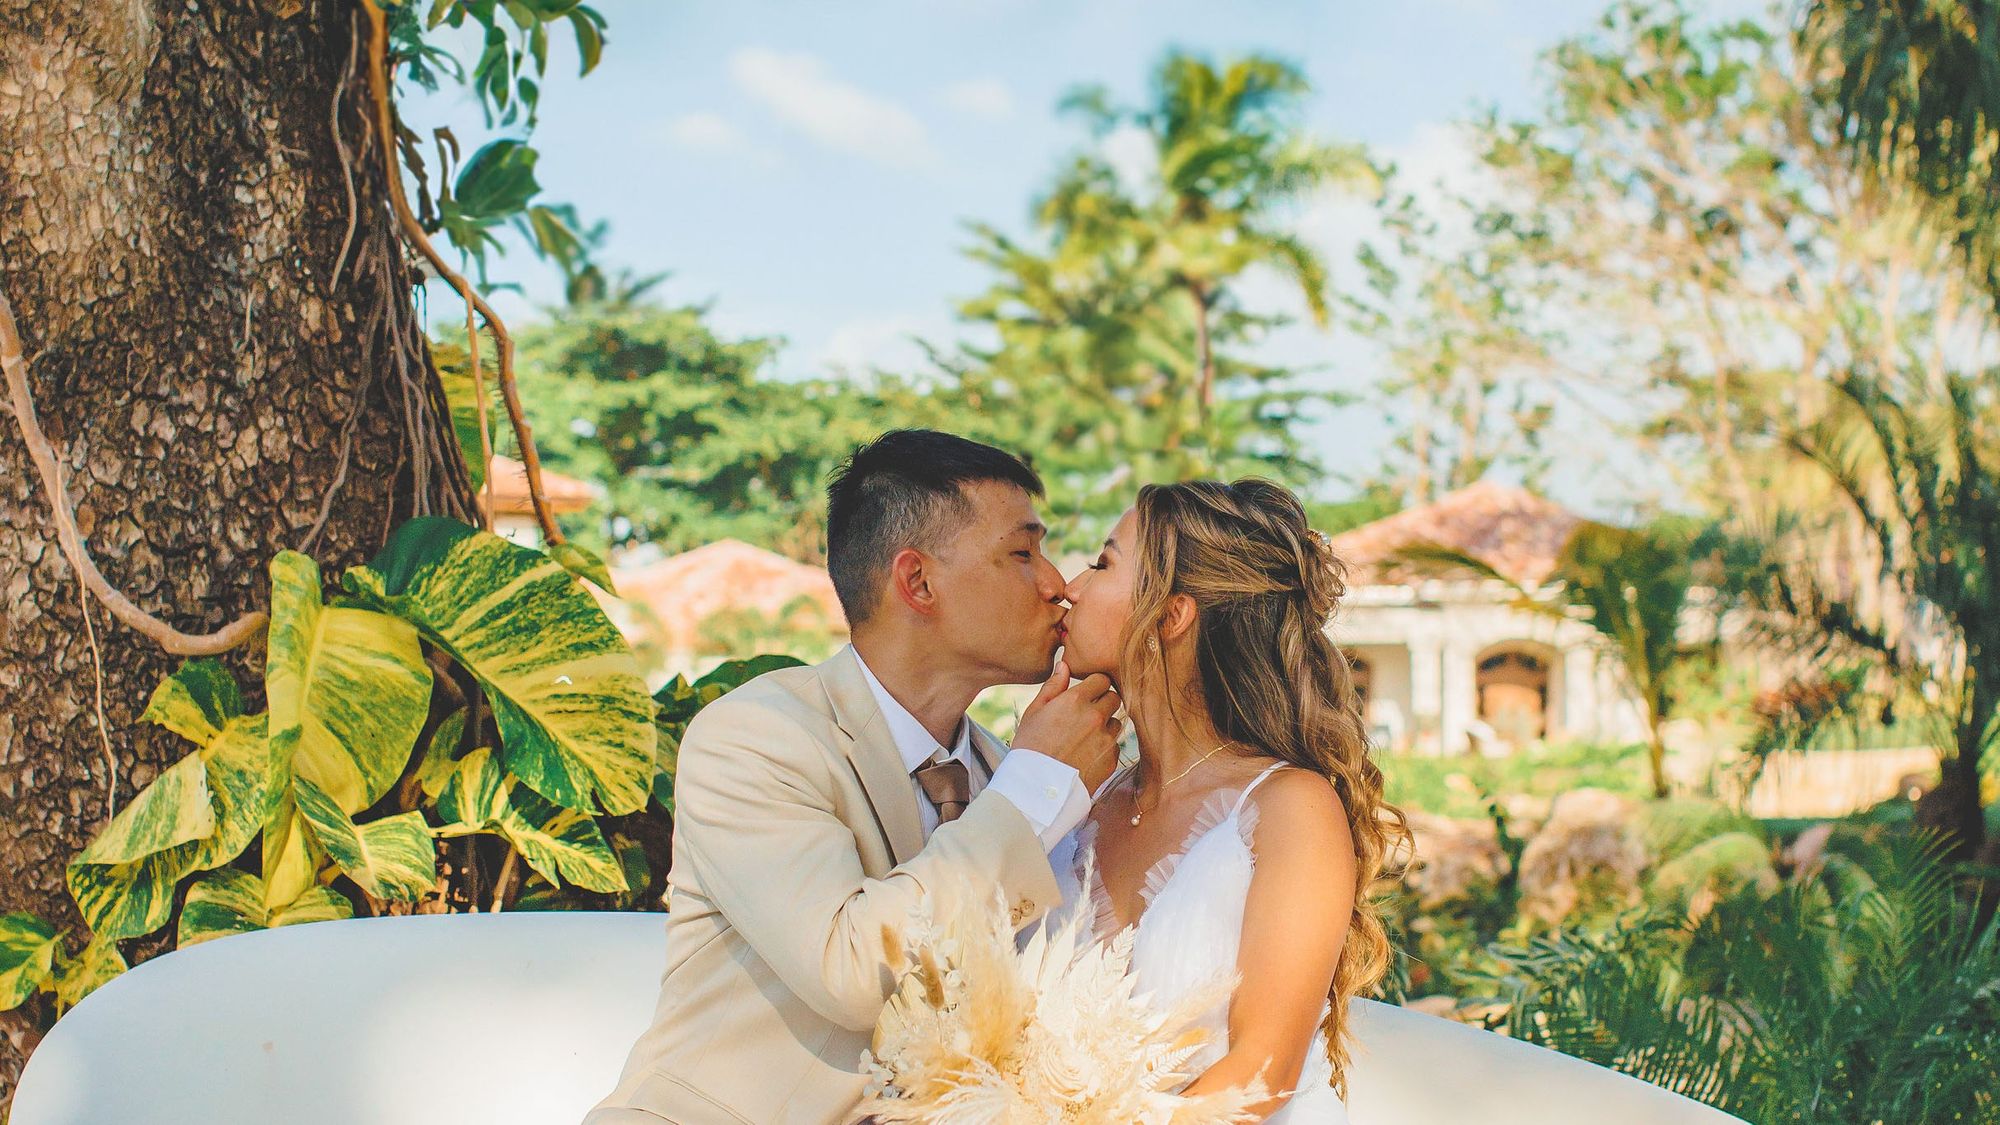 A Blissful Island Wedding Celebration: Kim & Timmy